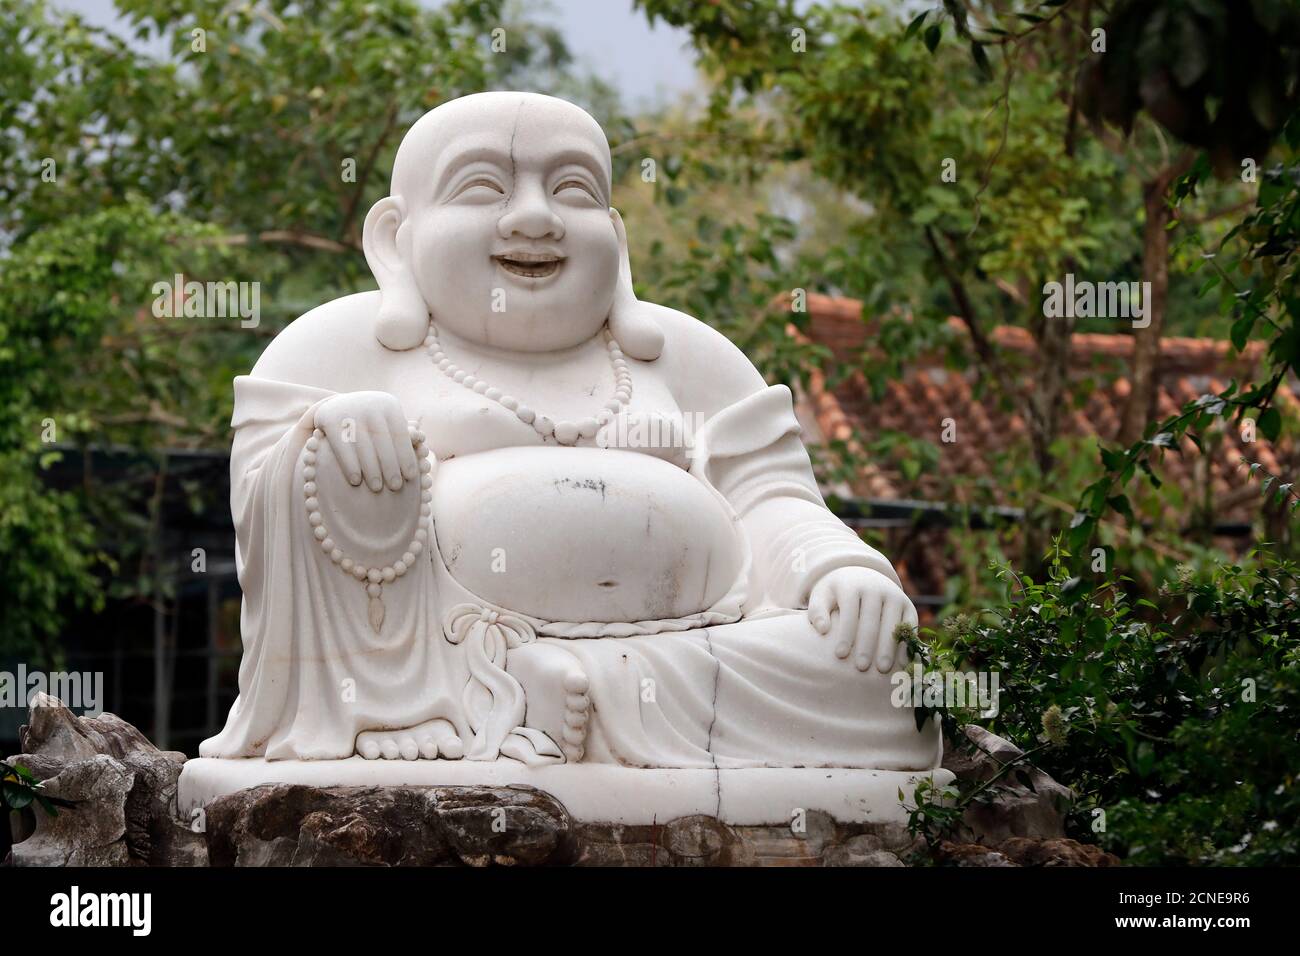 Thien Ung tempio buddista, Buddha di Maitreya sorridente, grande statua del Buddha di Maitreya felice, Quy Nhon, Vietnam, Indocina, Sud-est asiatico, Asia Foto Stock